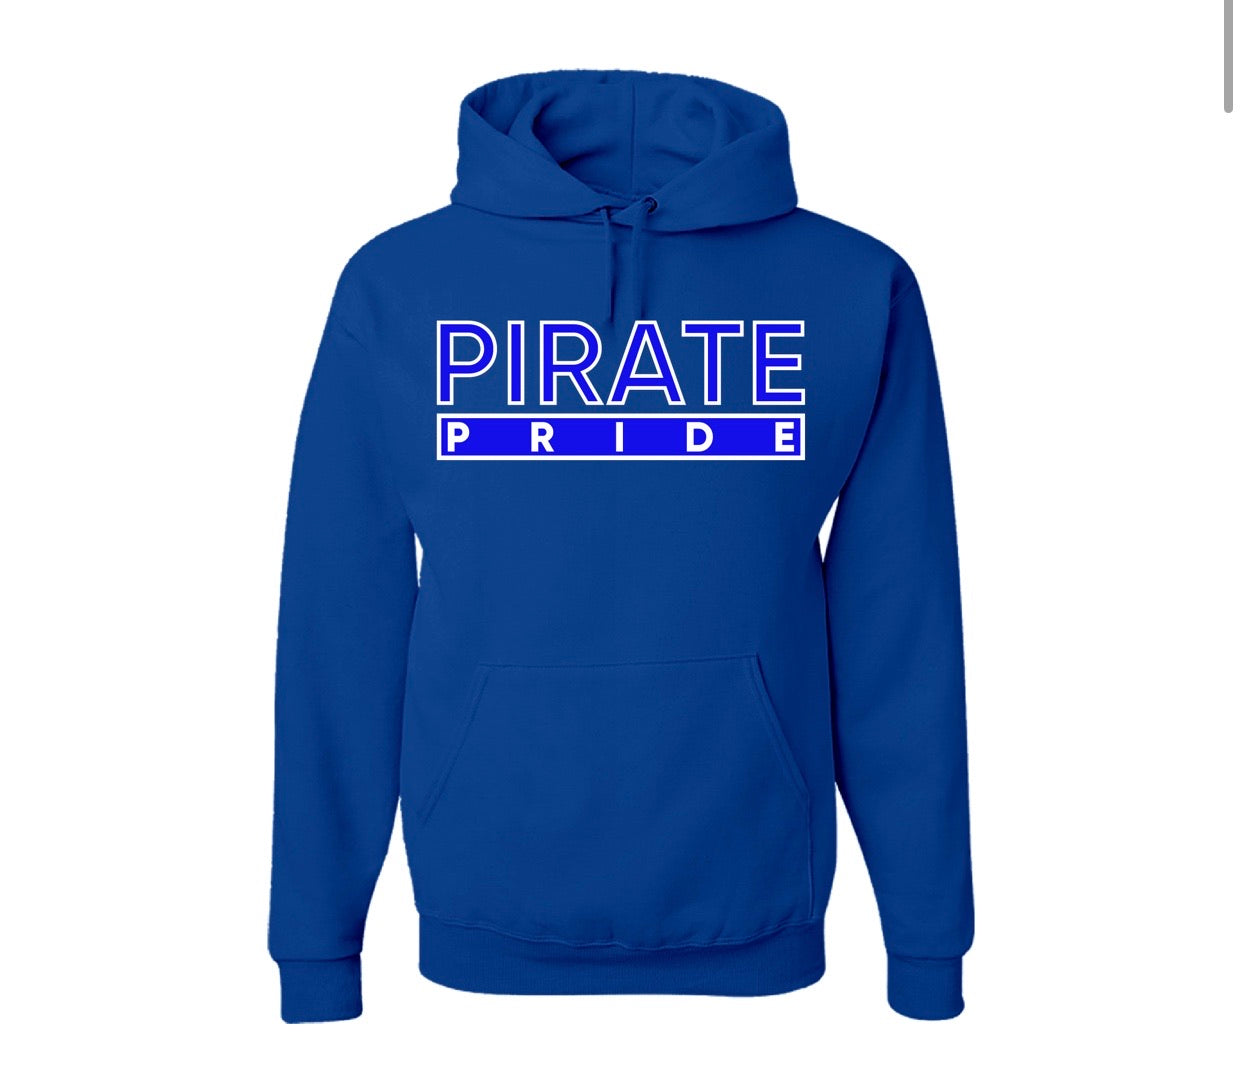 The “Pirate Pride” Hoodie in Royal Blue/White (VA)